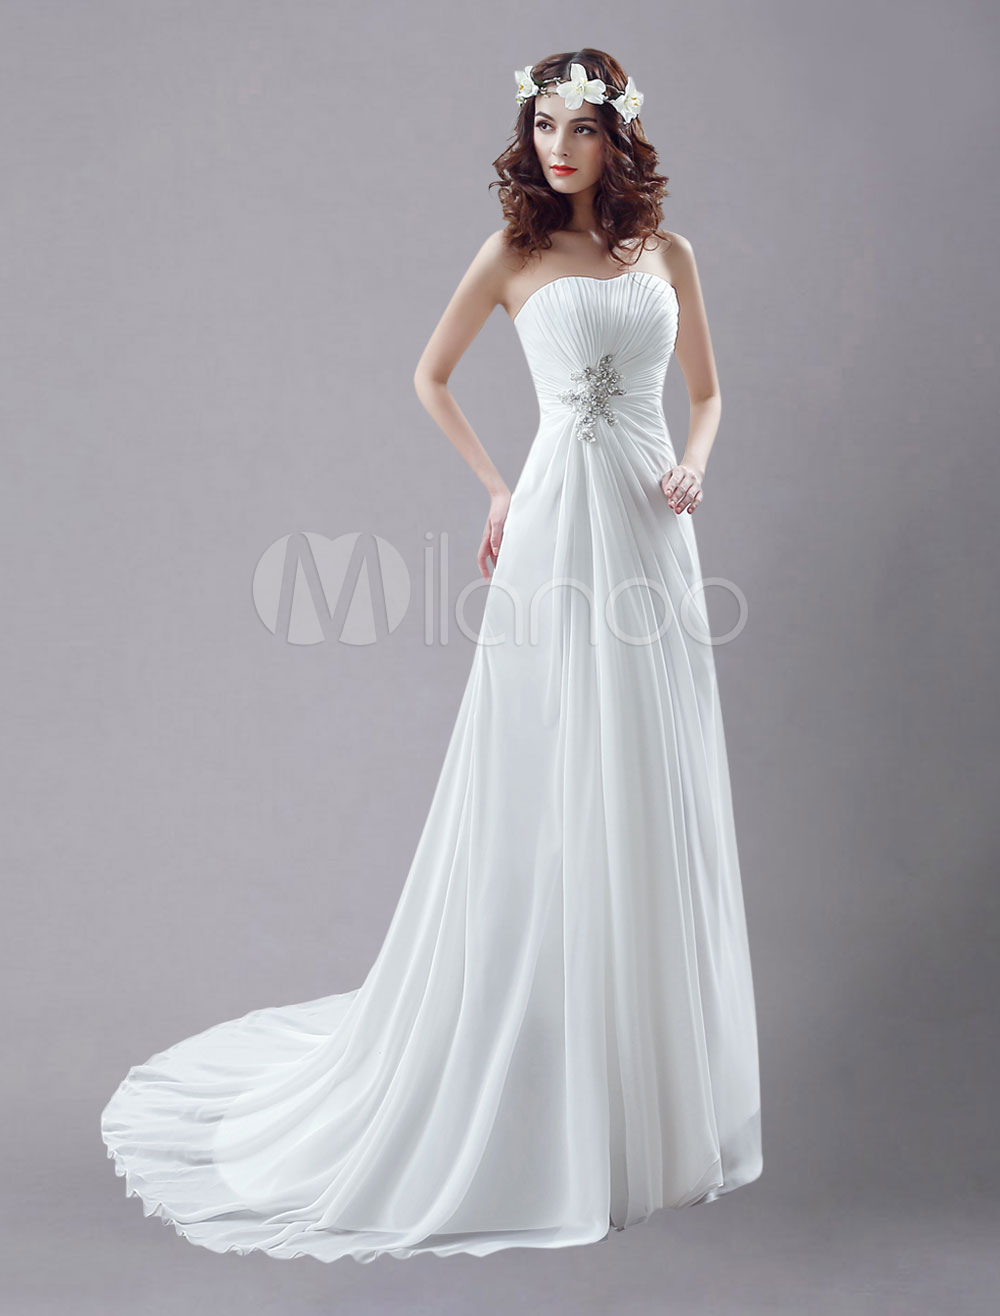 White Wedding Dress Strapless Rhinestone Pleated Wedding Gown - Milanoo.com